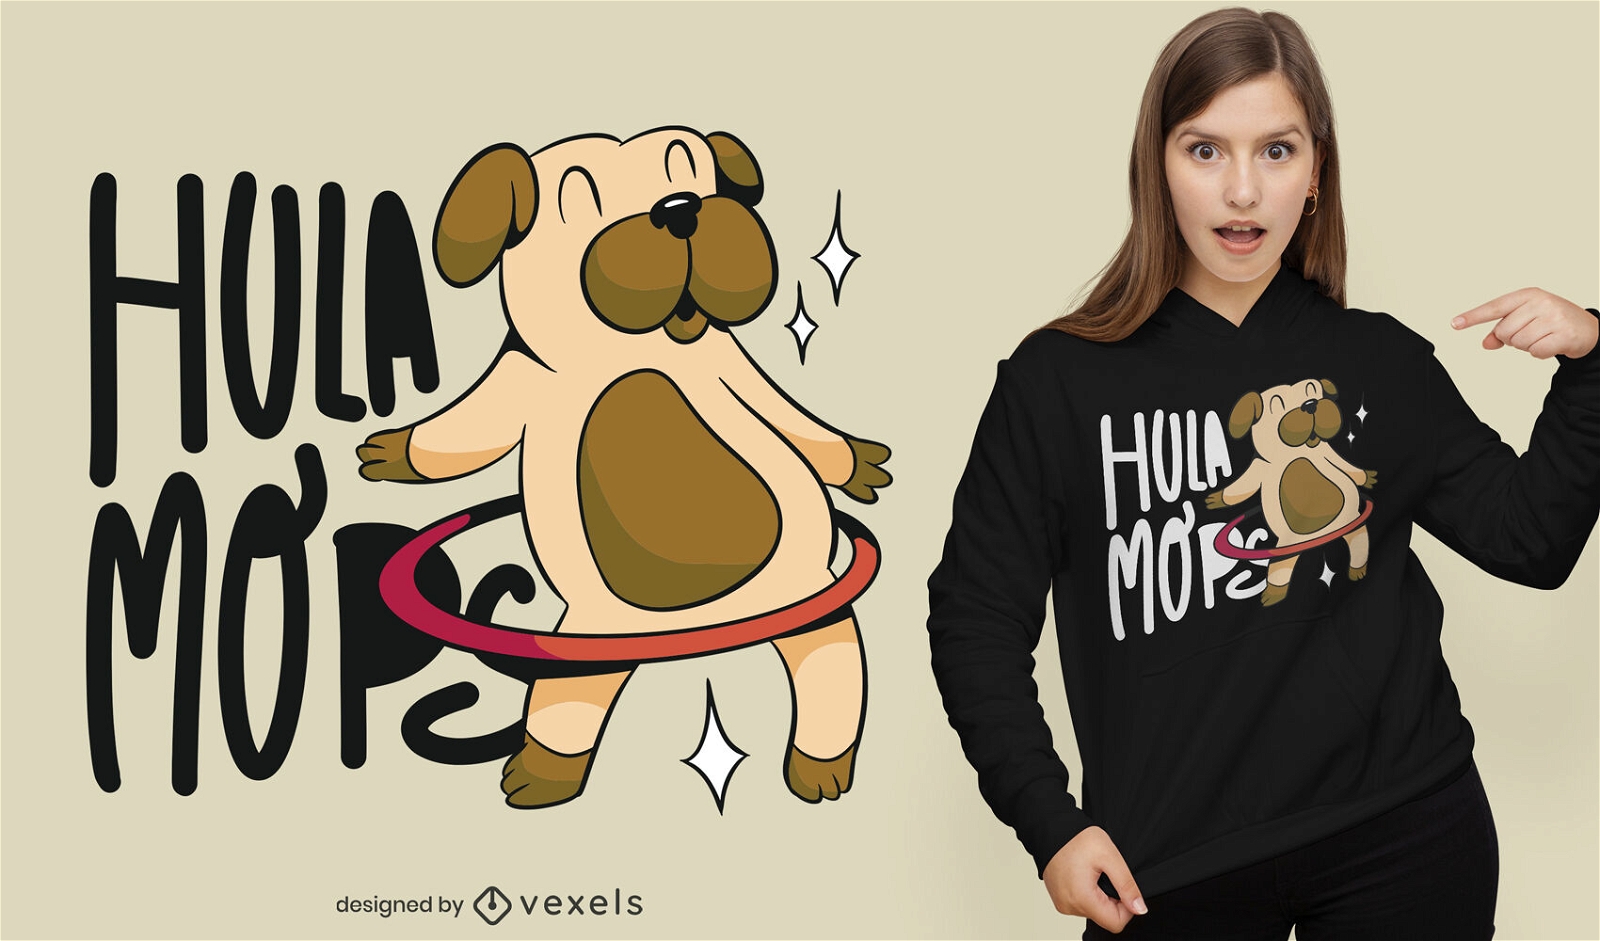 Hula hoop dog t-shirt design